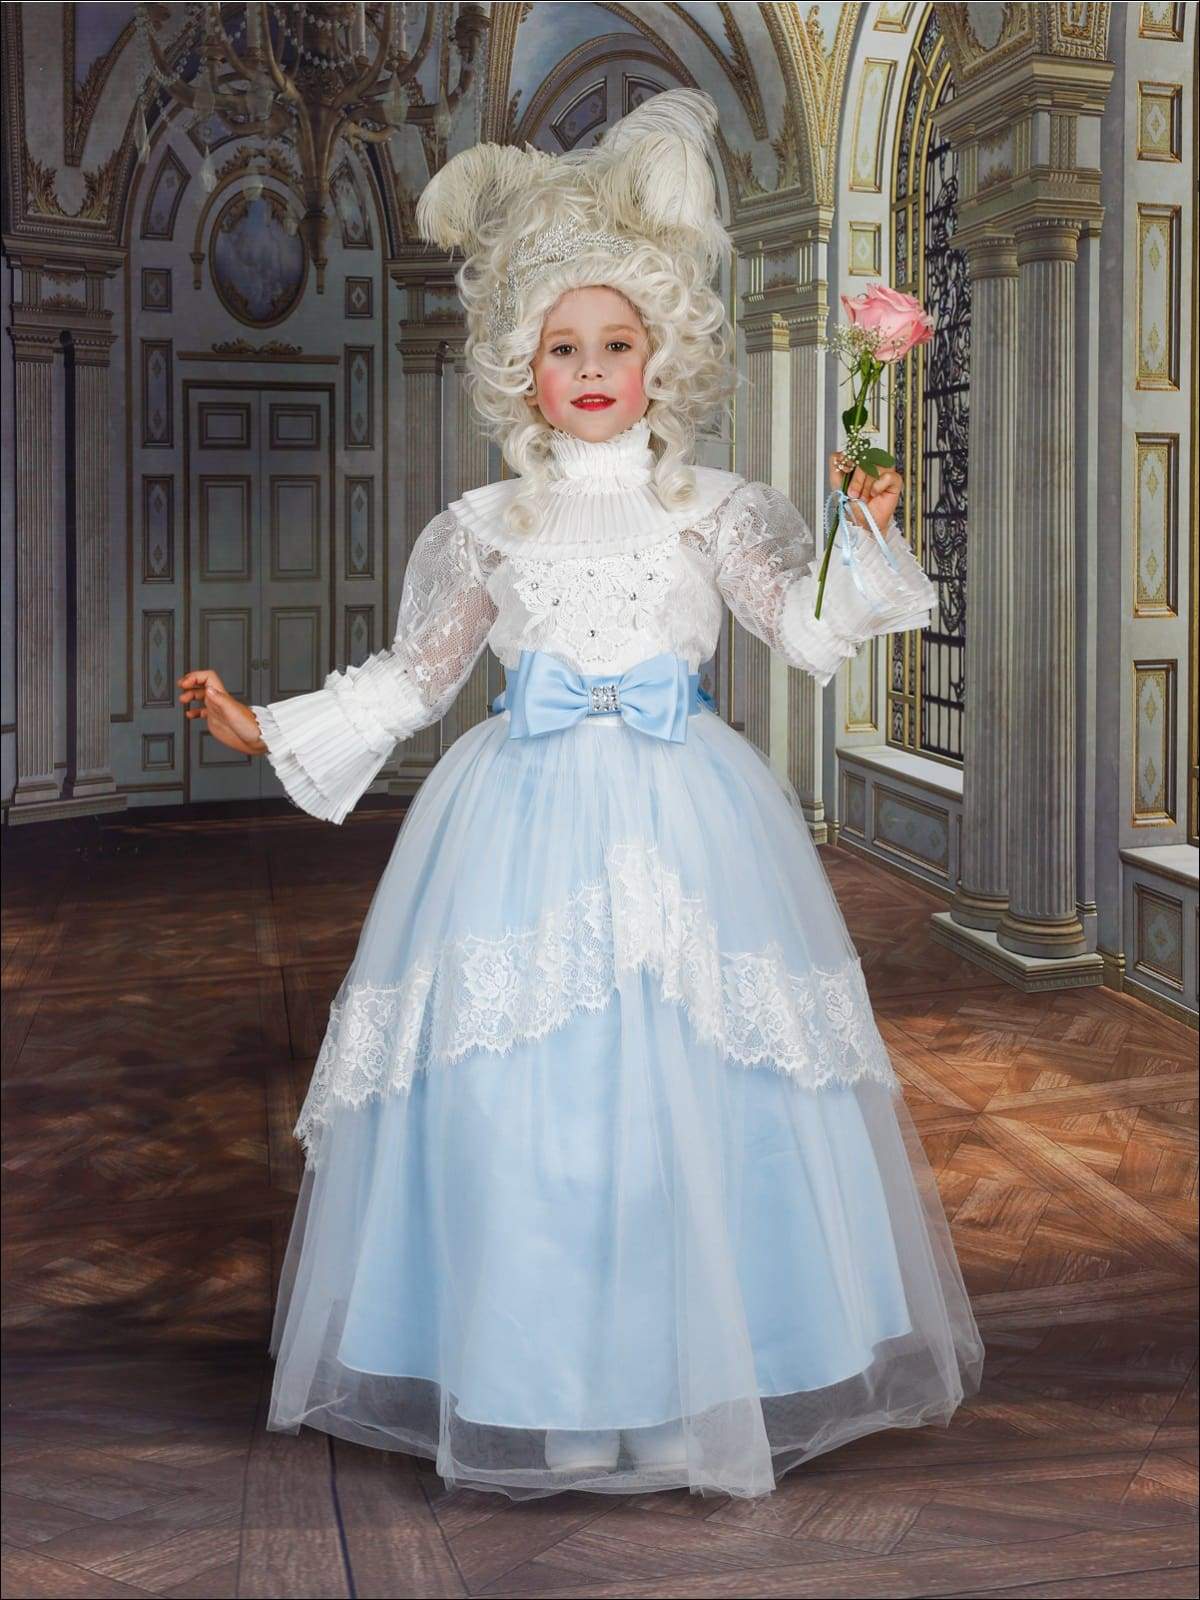 Deluxe Marie Antoinette Inspired Halloween Costume - Mia Belle Girls